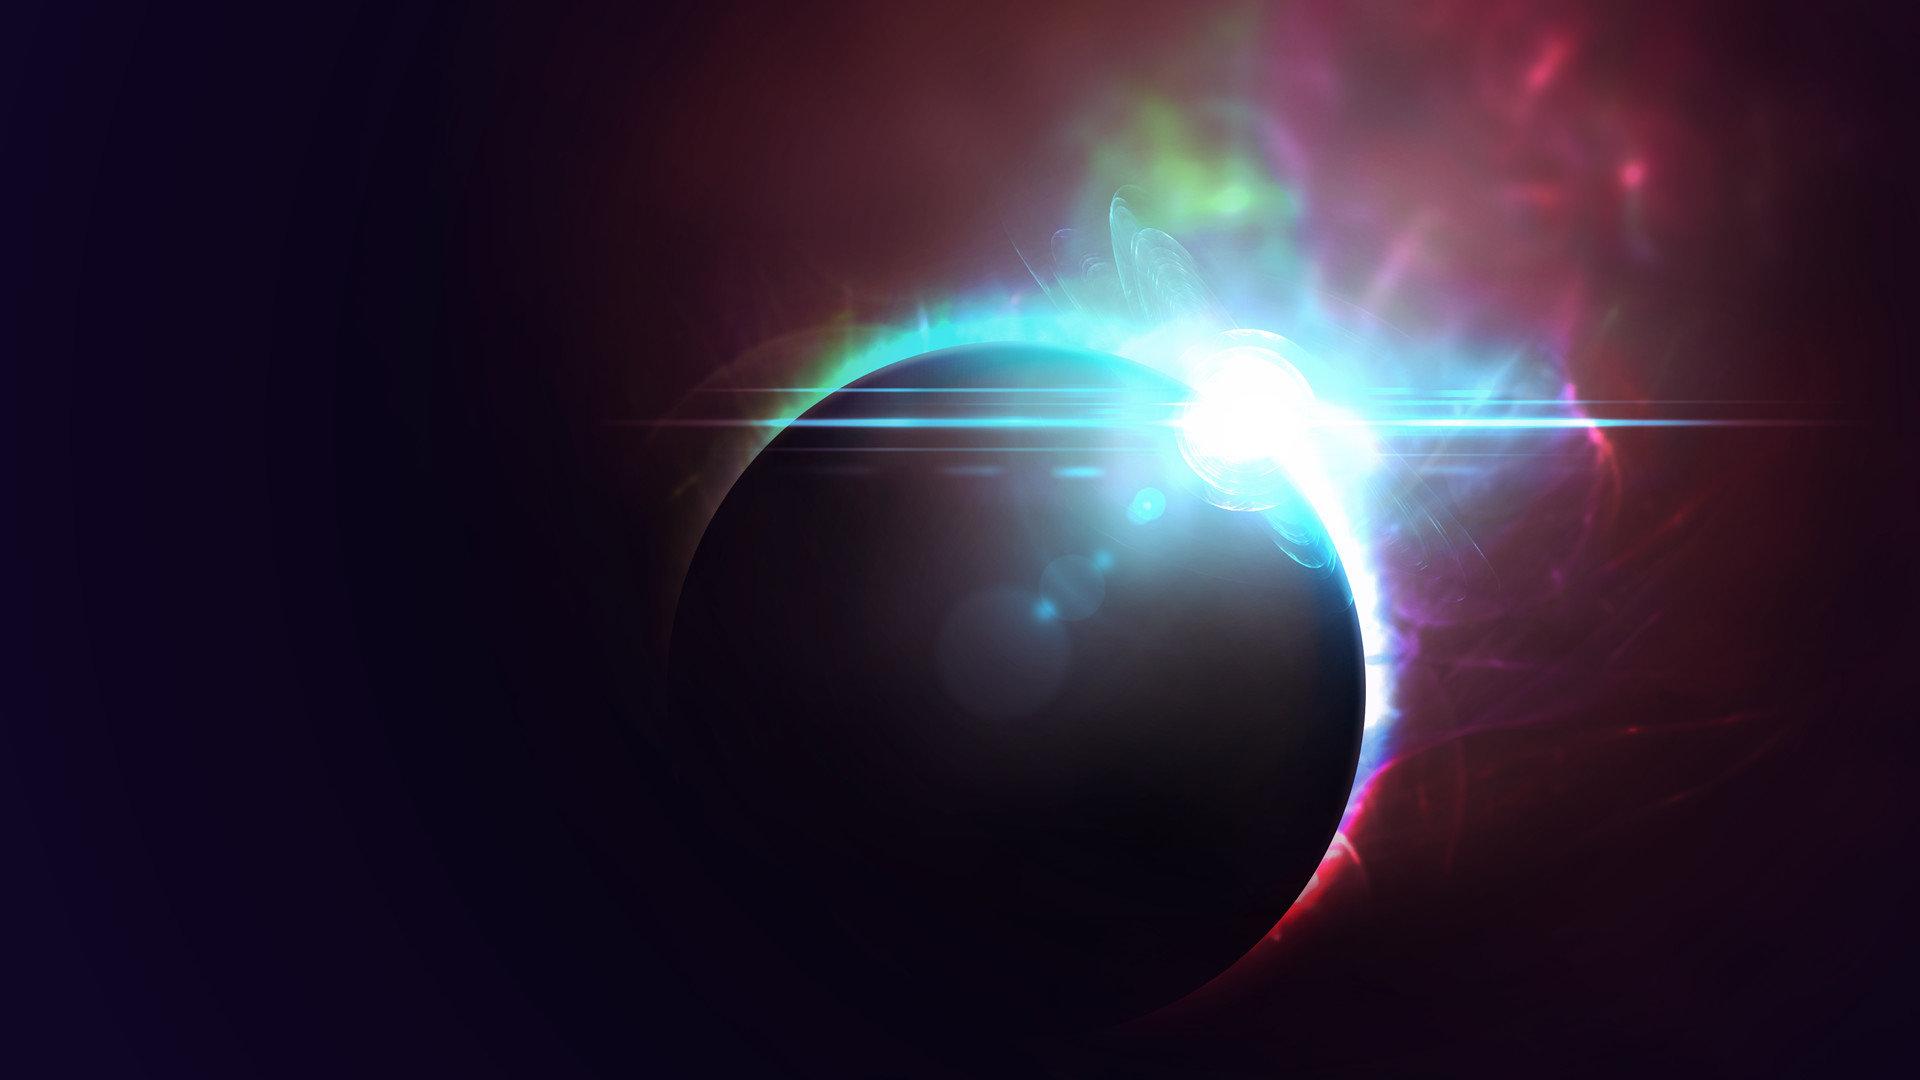 Eclipse wallpaper HD for desktop background